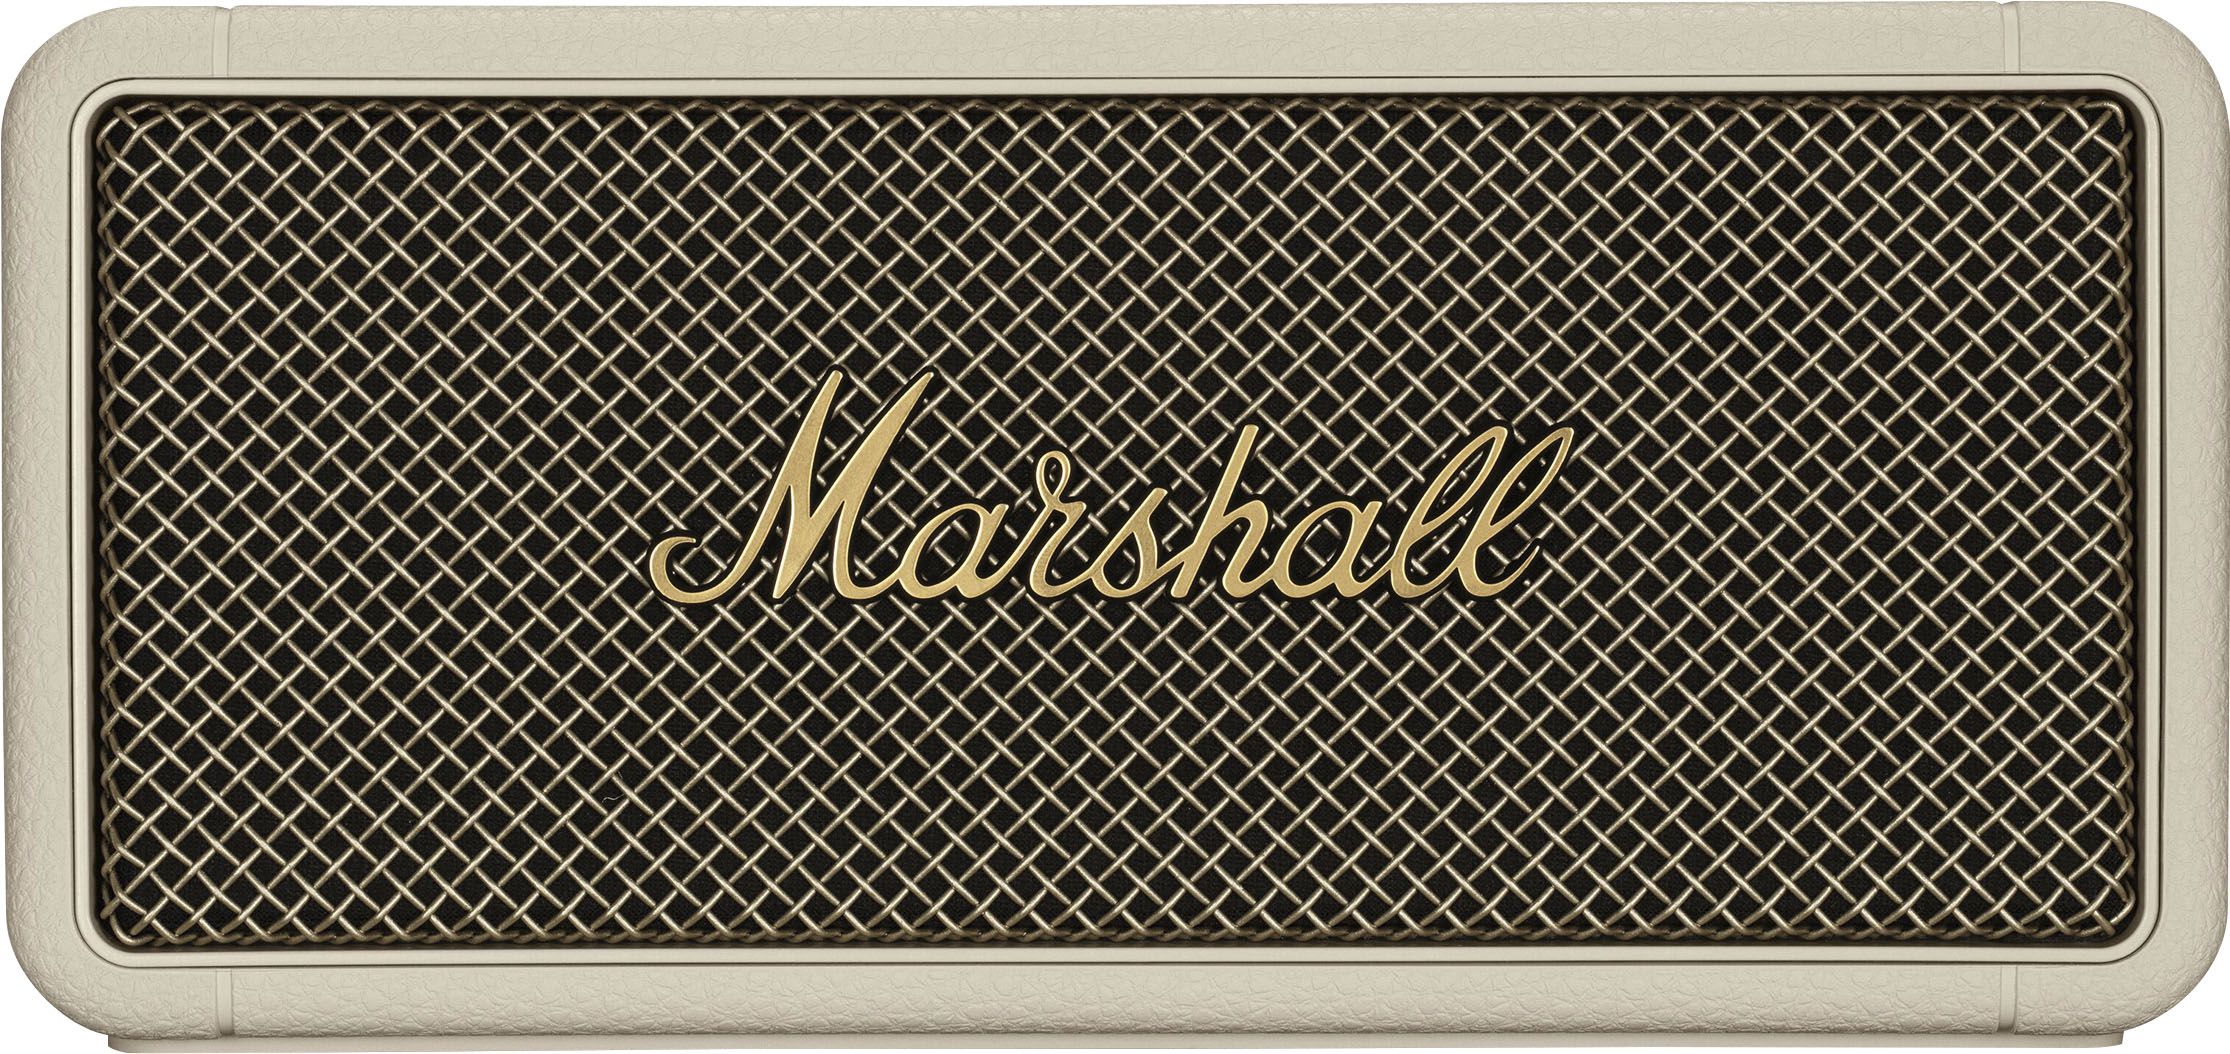 Marshall Emberton II Bluetooth Speaker CREAM 1006237 - Best Buy | Best Buy U.S.